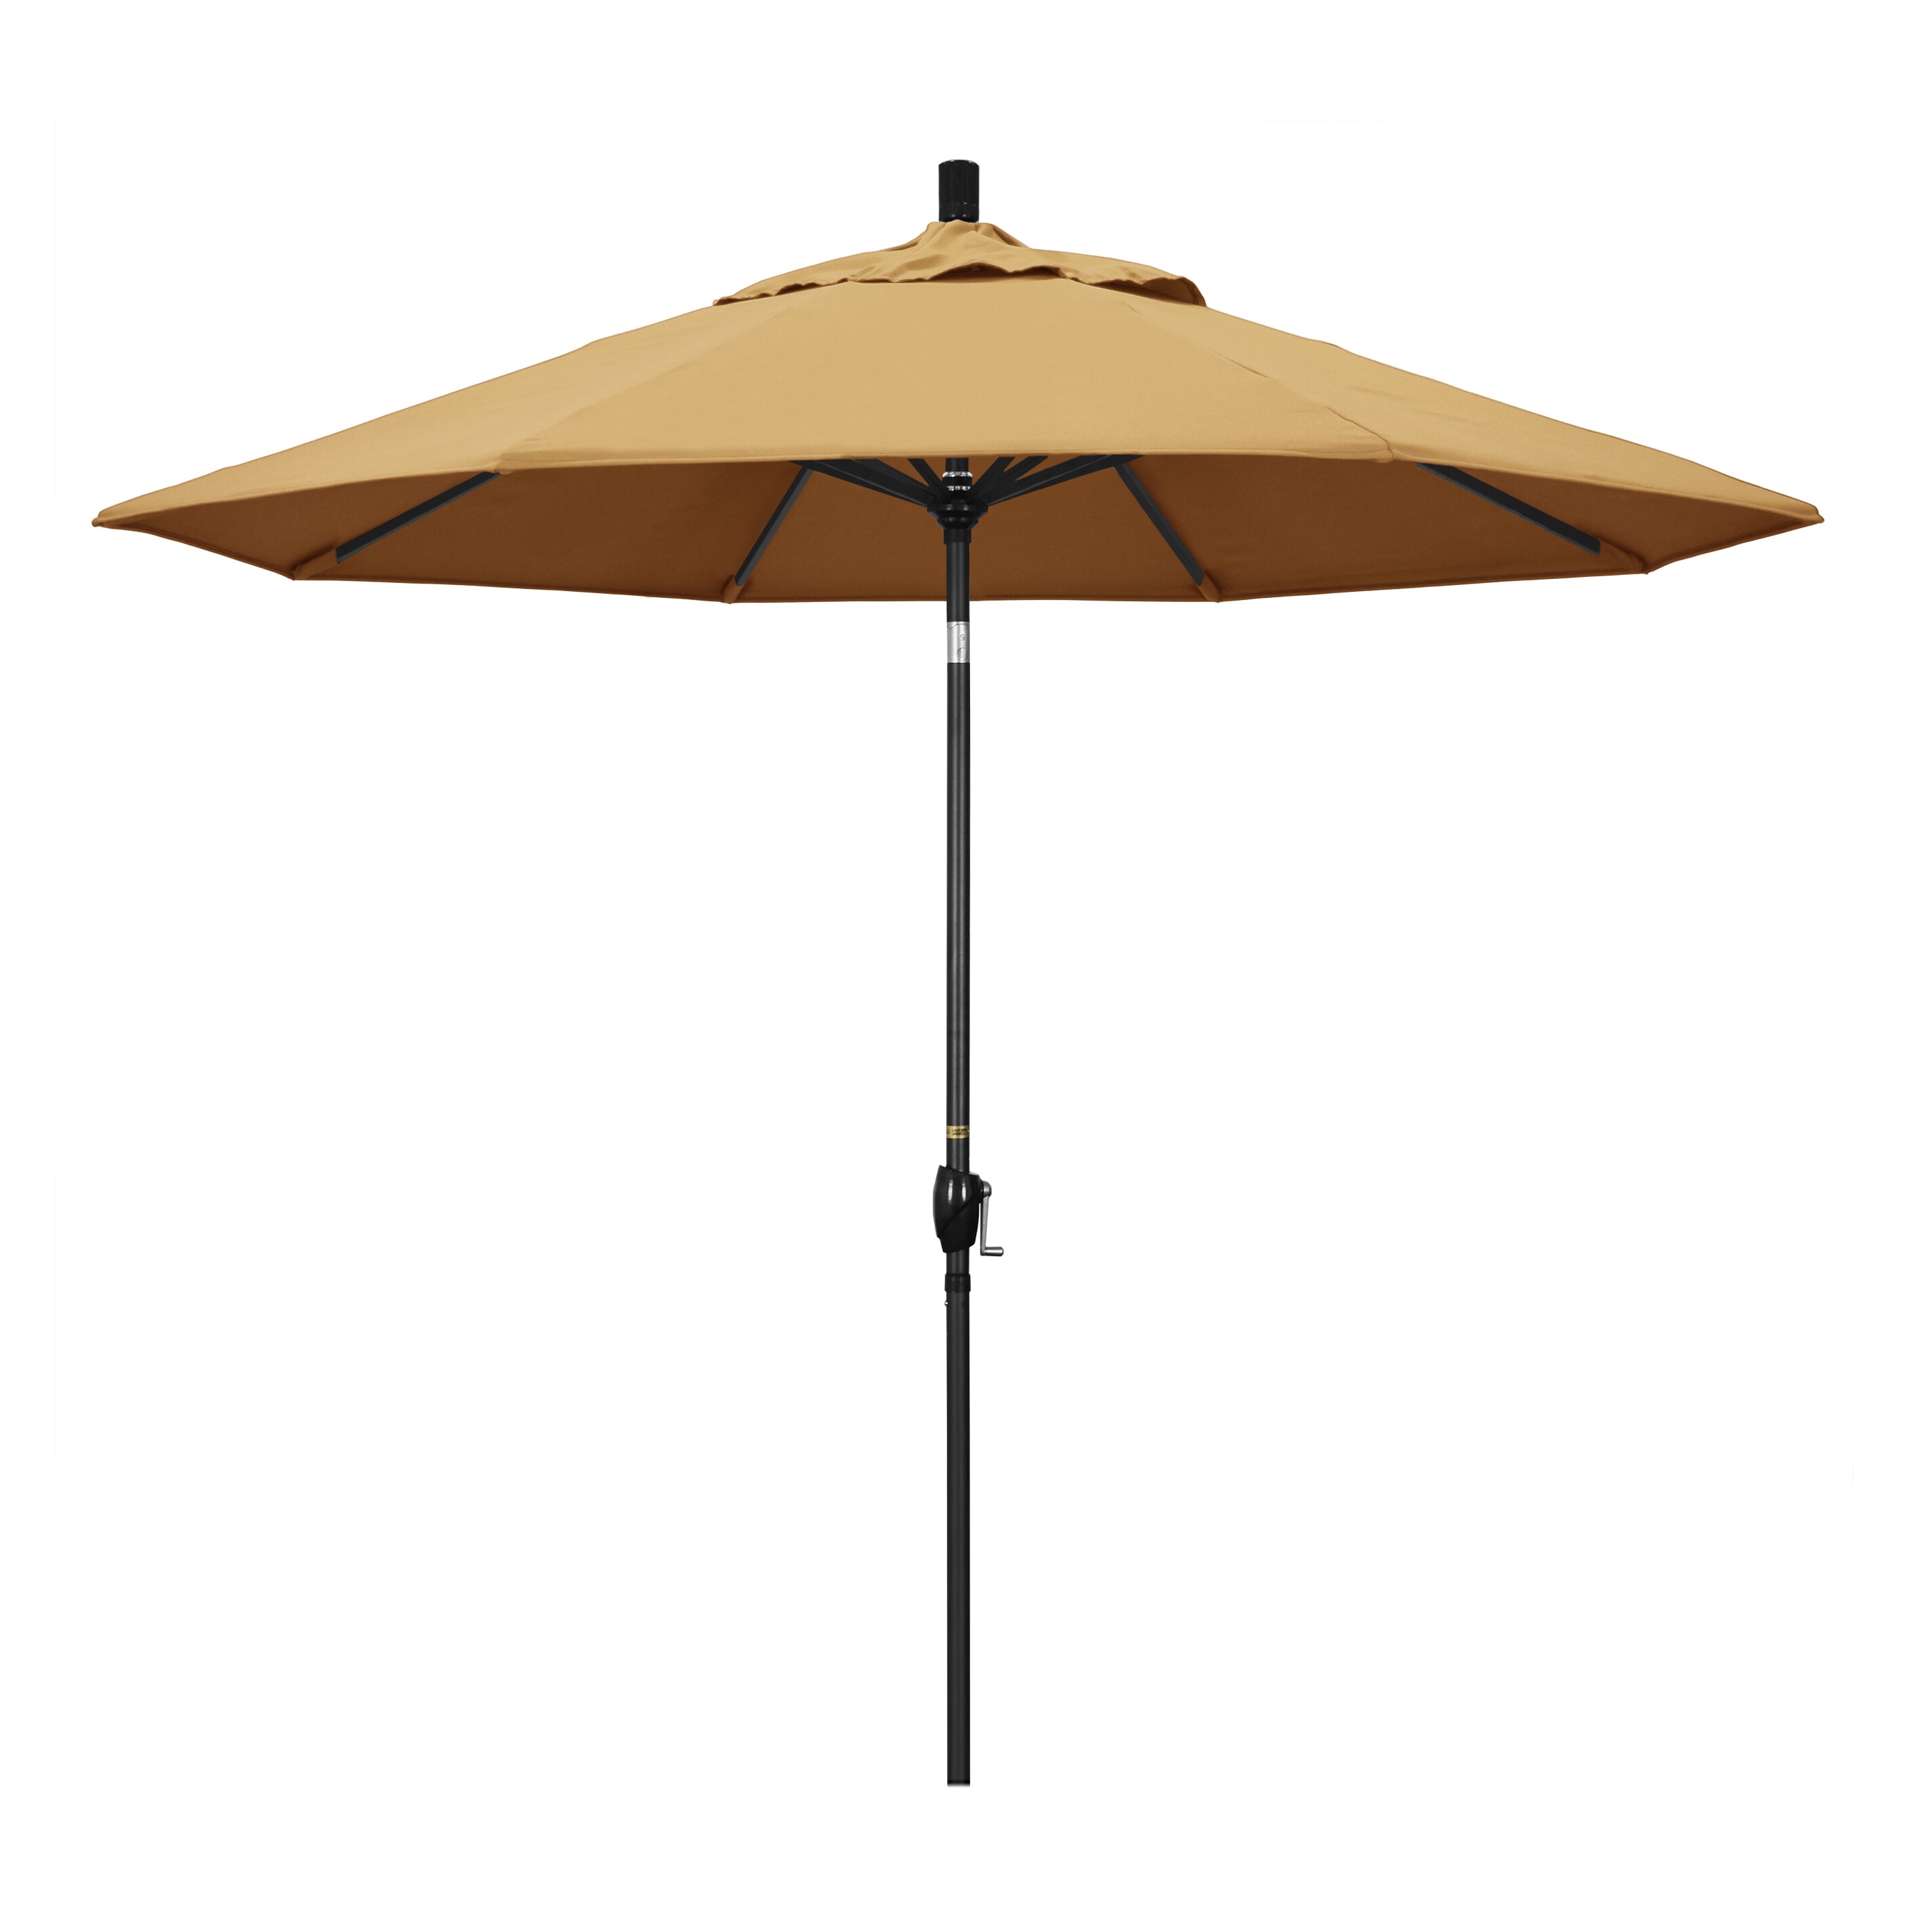 Push Button Tilt Sunbrella Wheat Black Pole Crank Lift California Umbrella 9 Round Aluminum Market Umbrella 